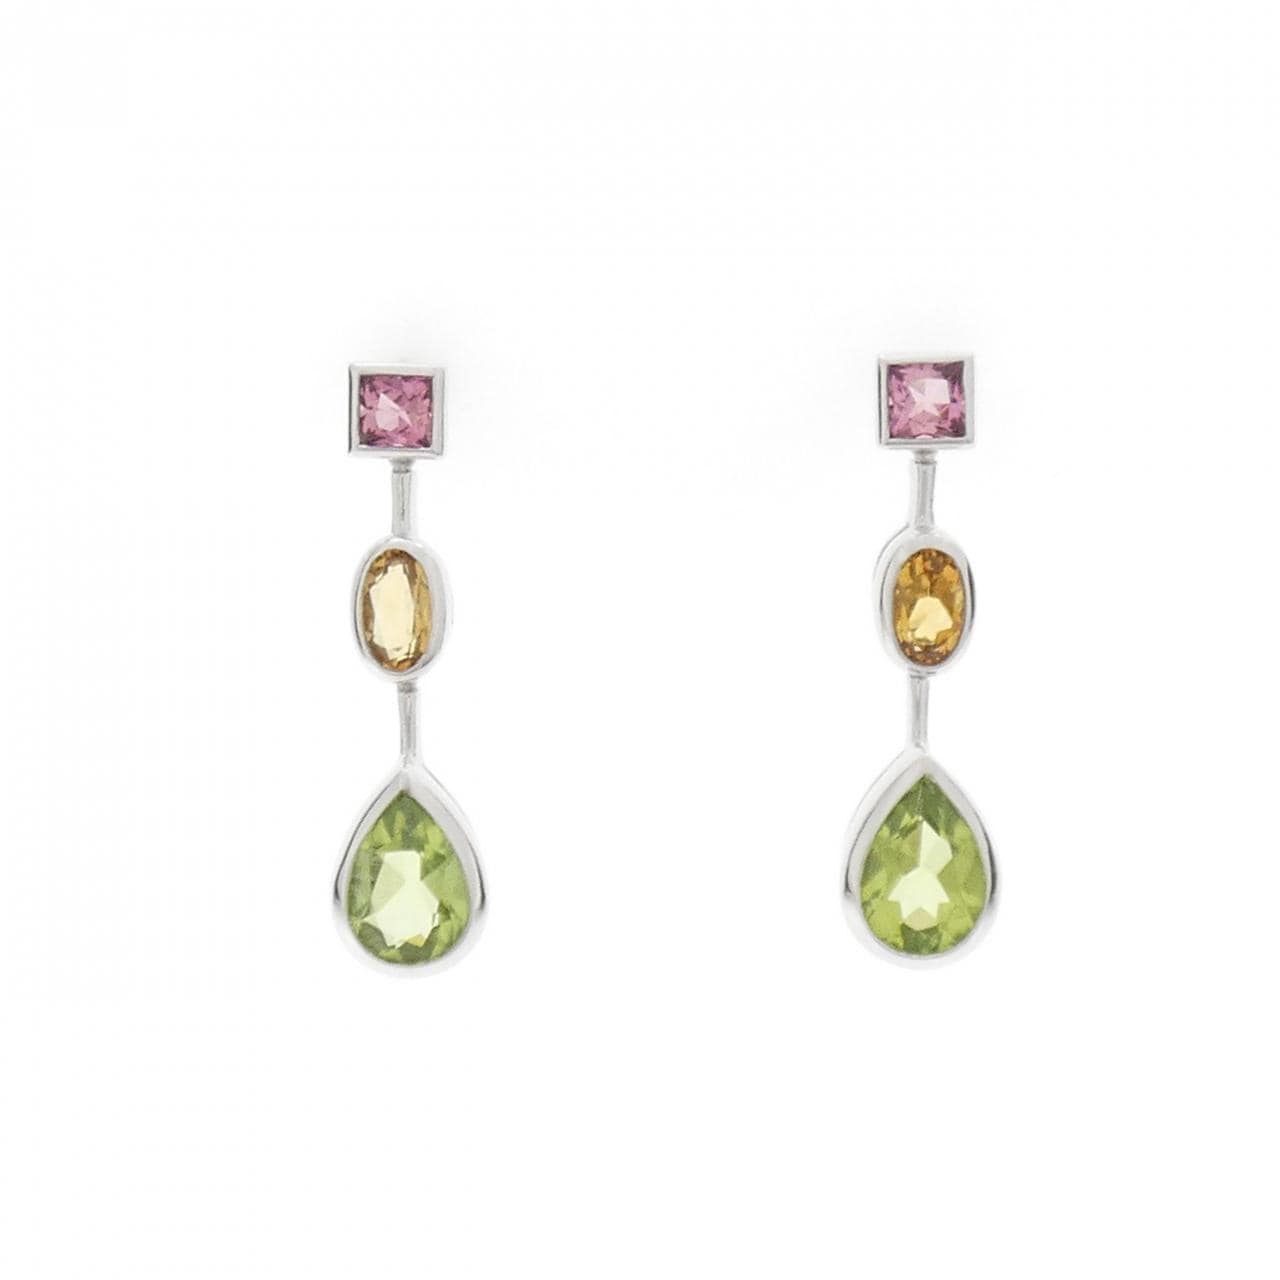 K18WG/K14WG colored stone earrings